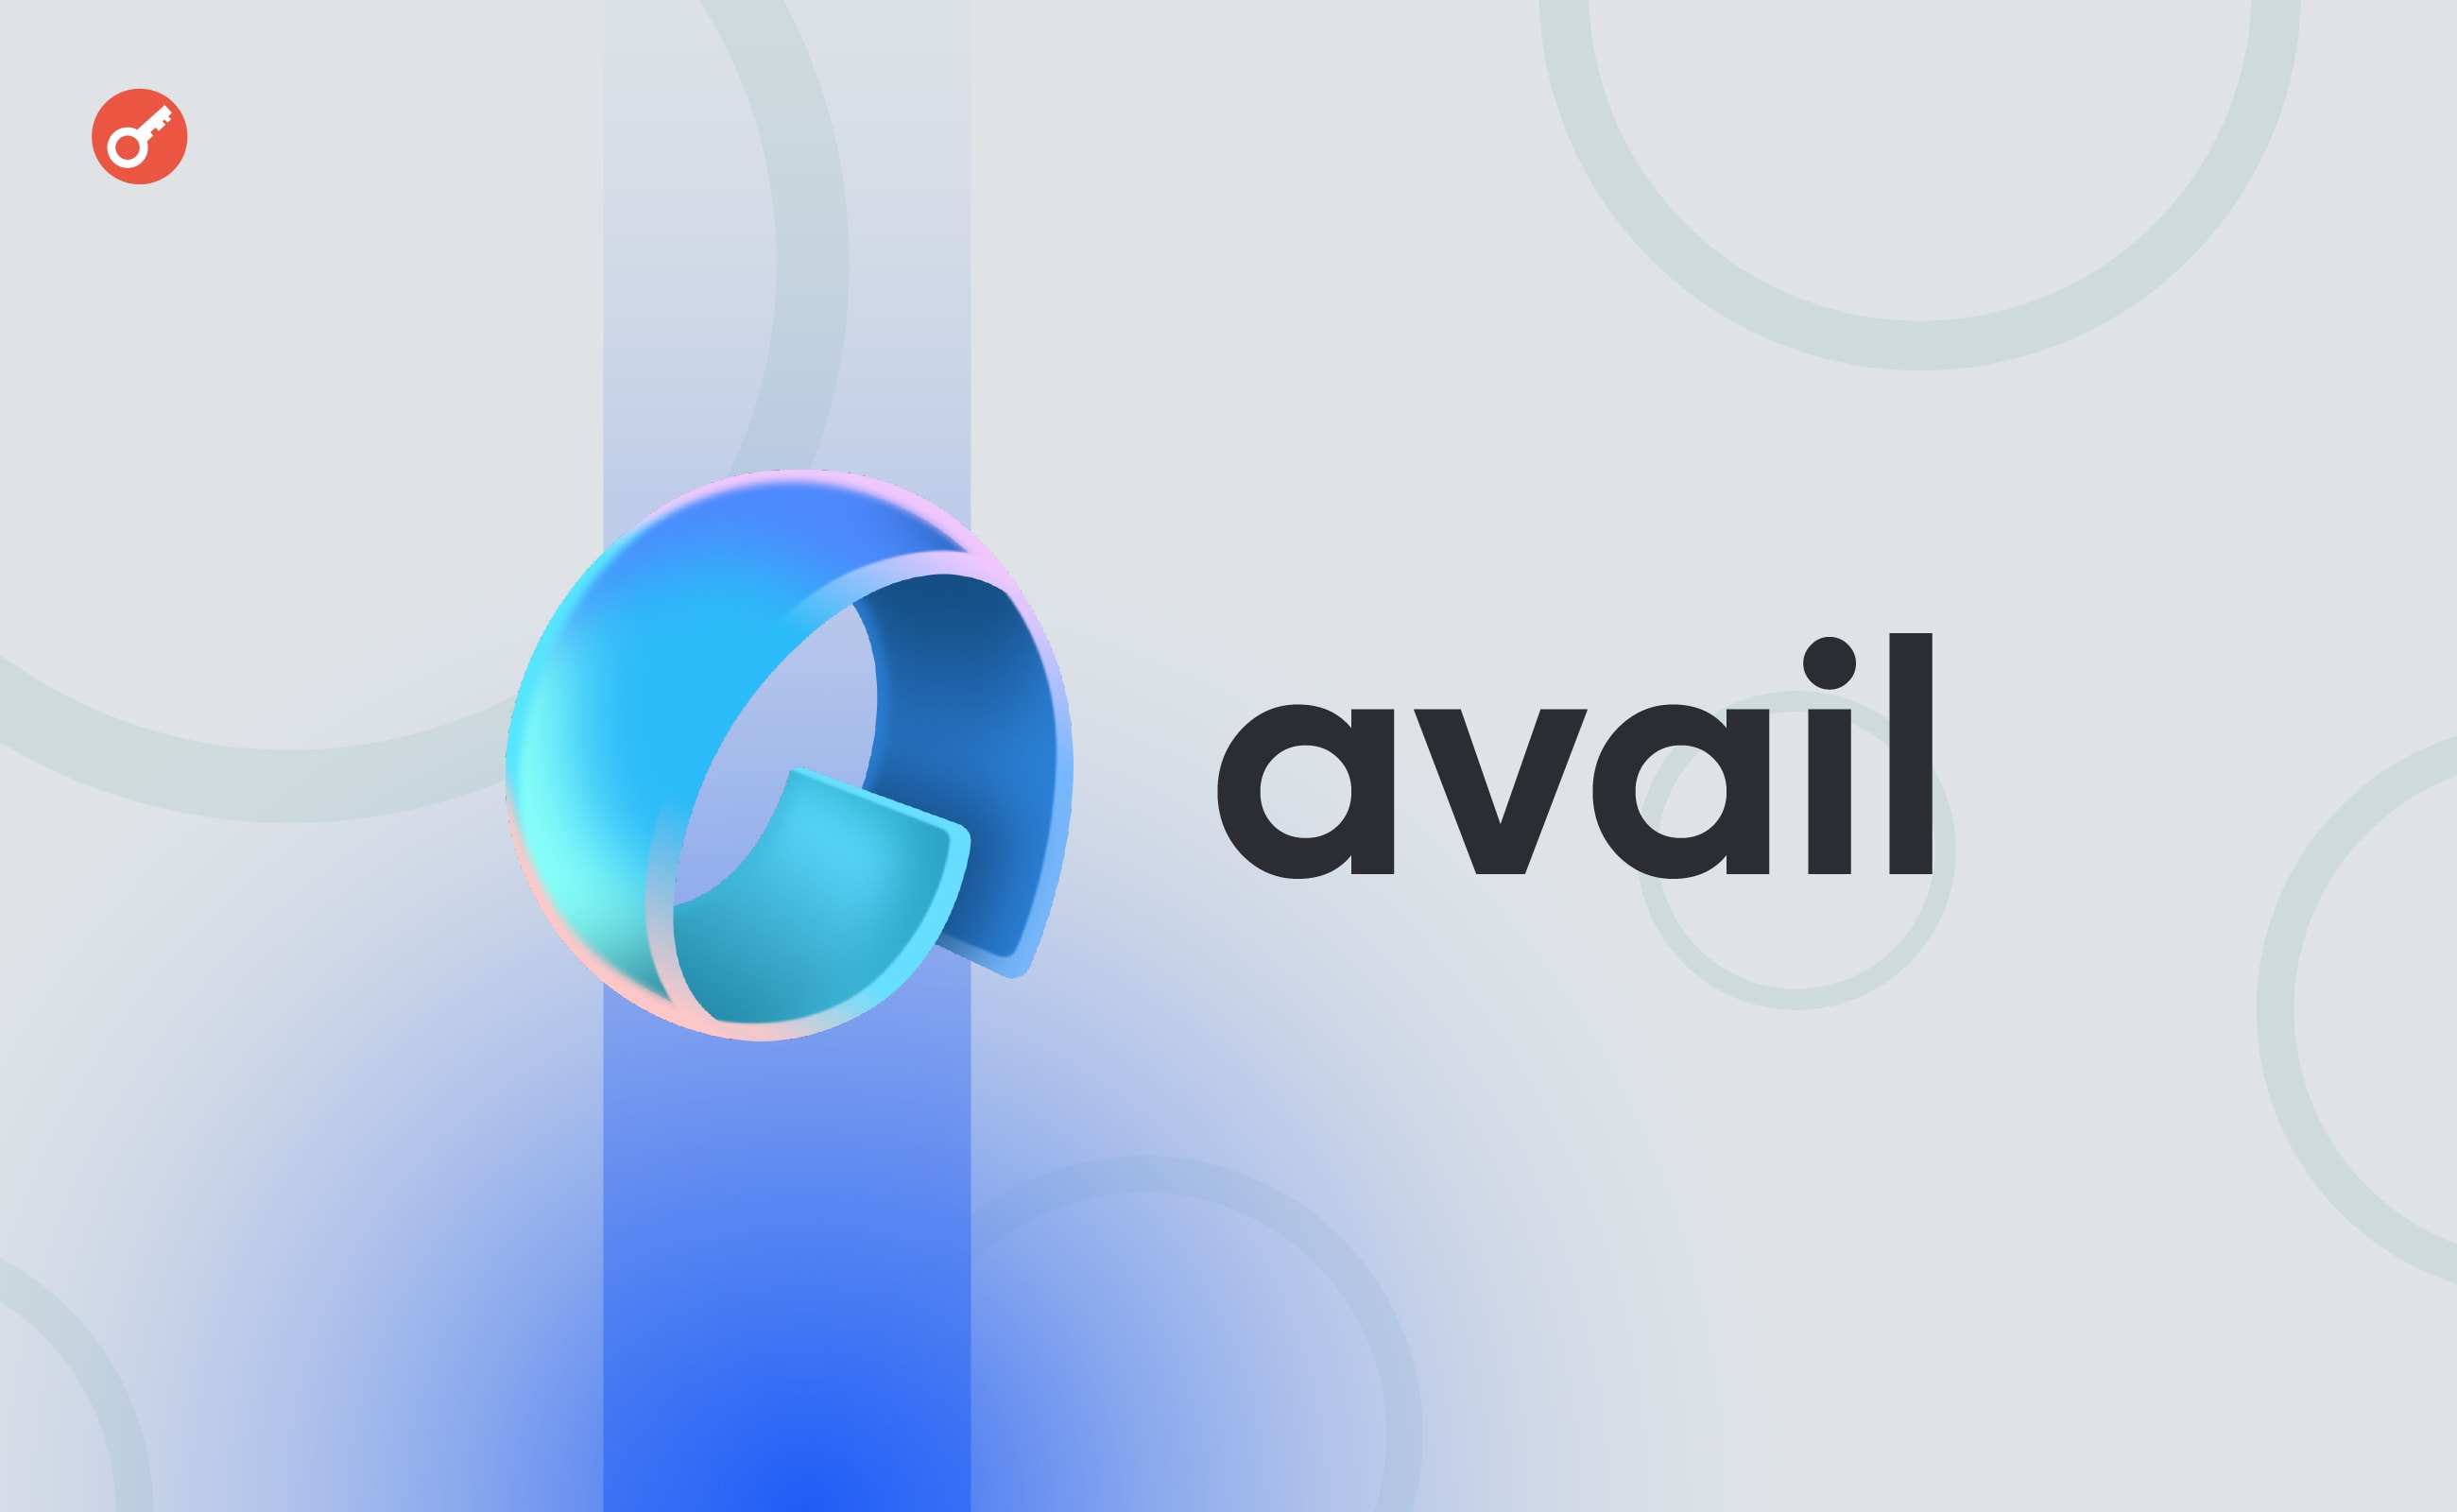 Команда протокола Avail объявила о проведении аирдропа. Заглавный коллаж новости.